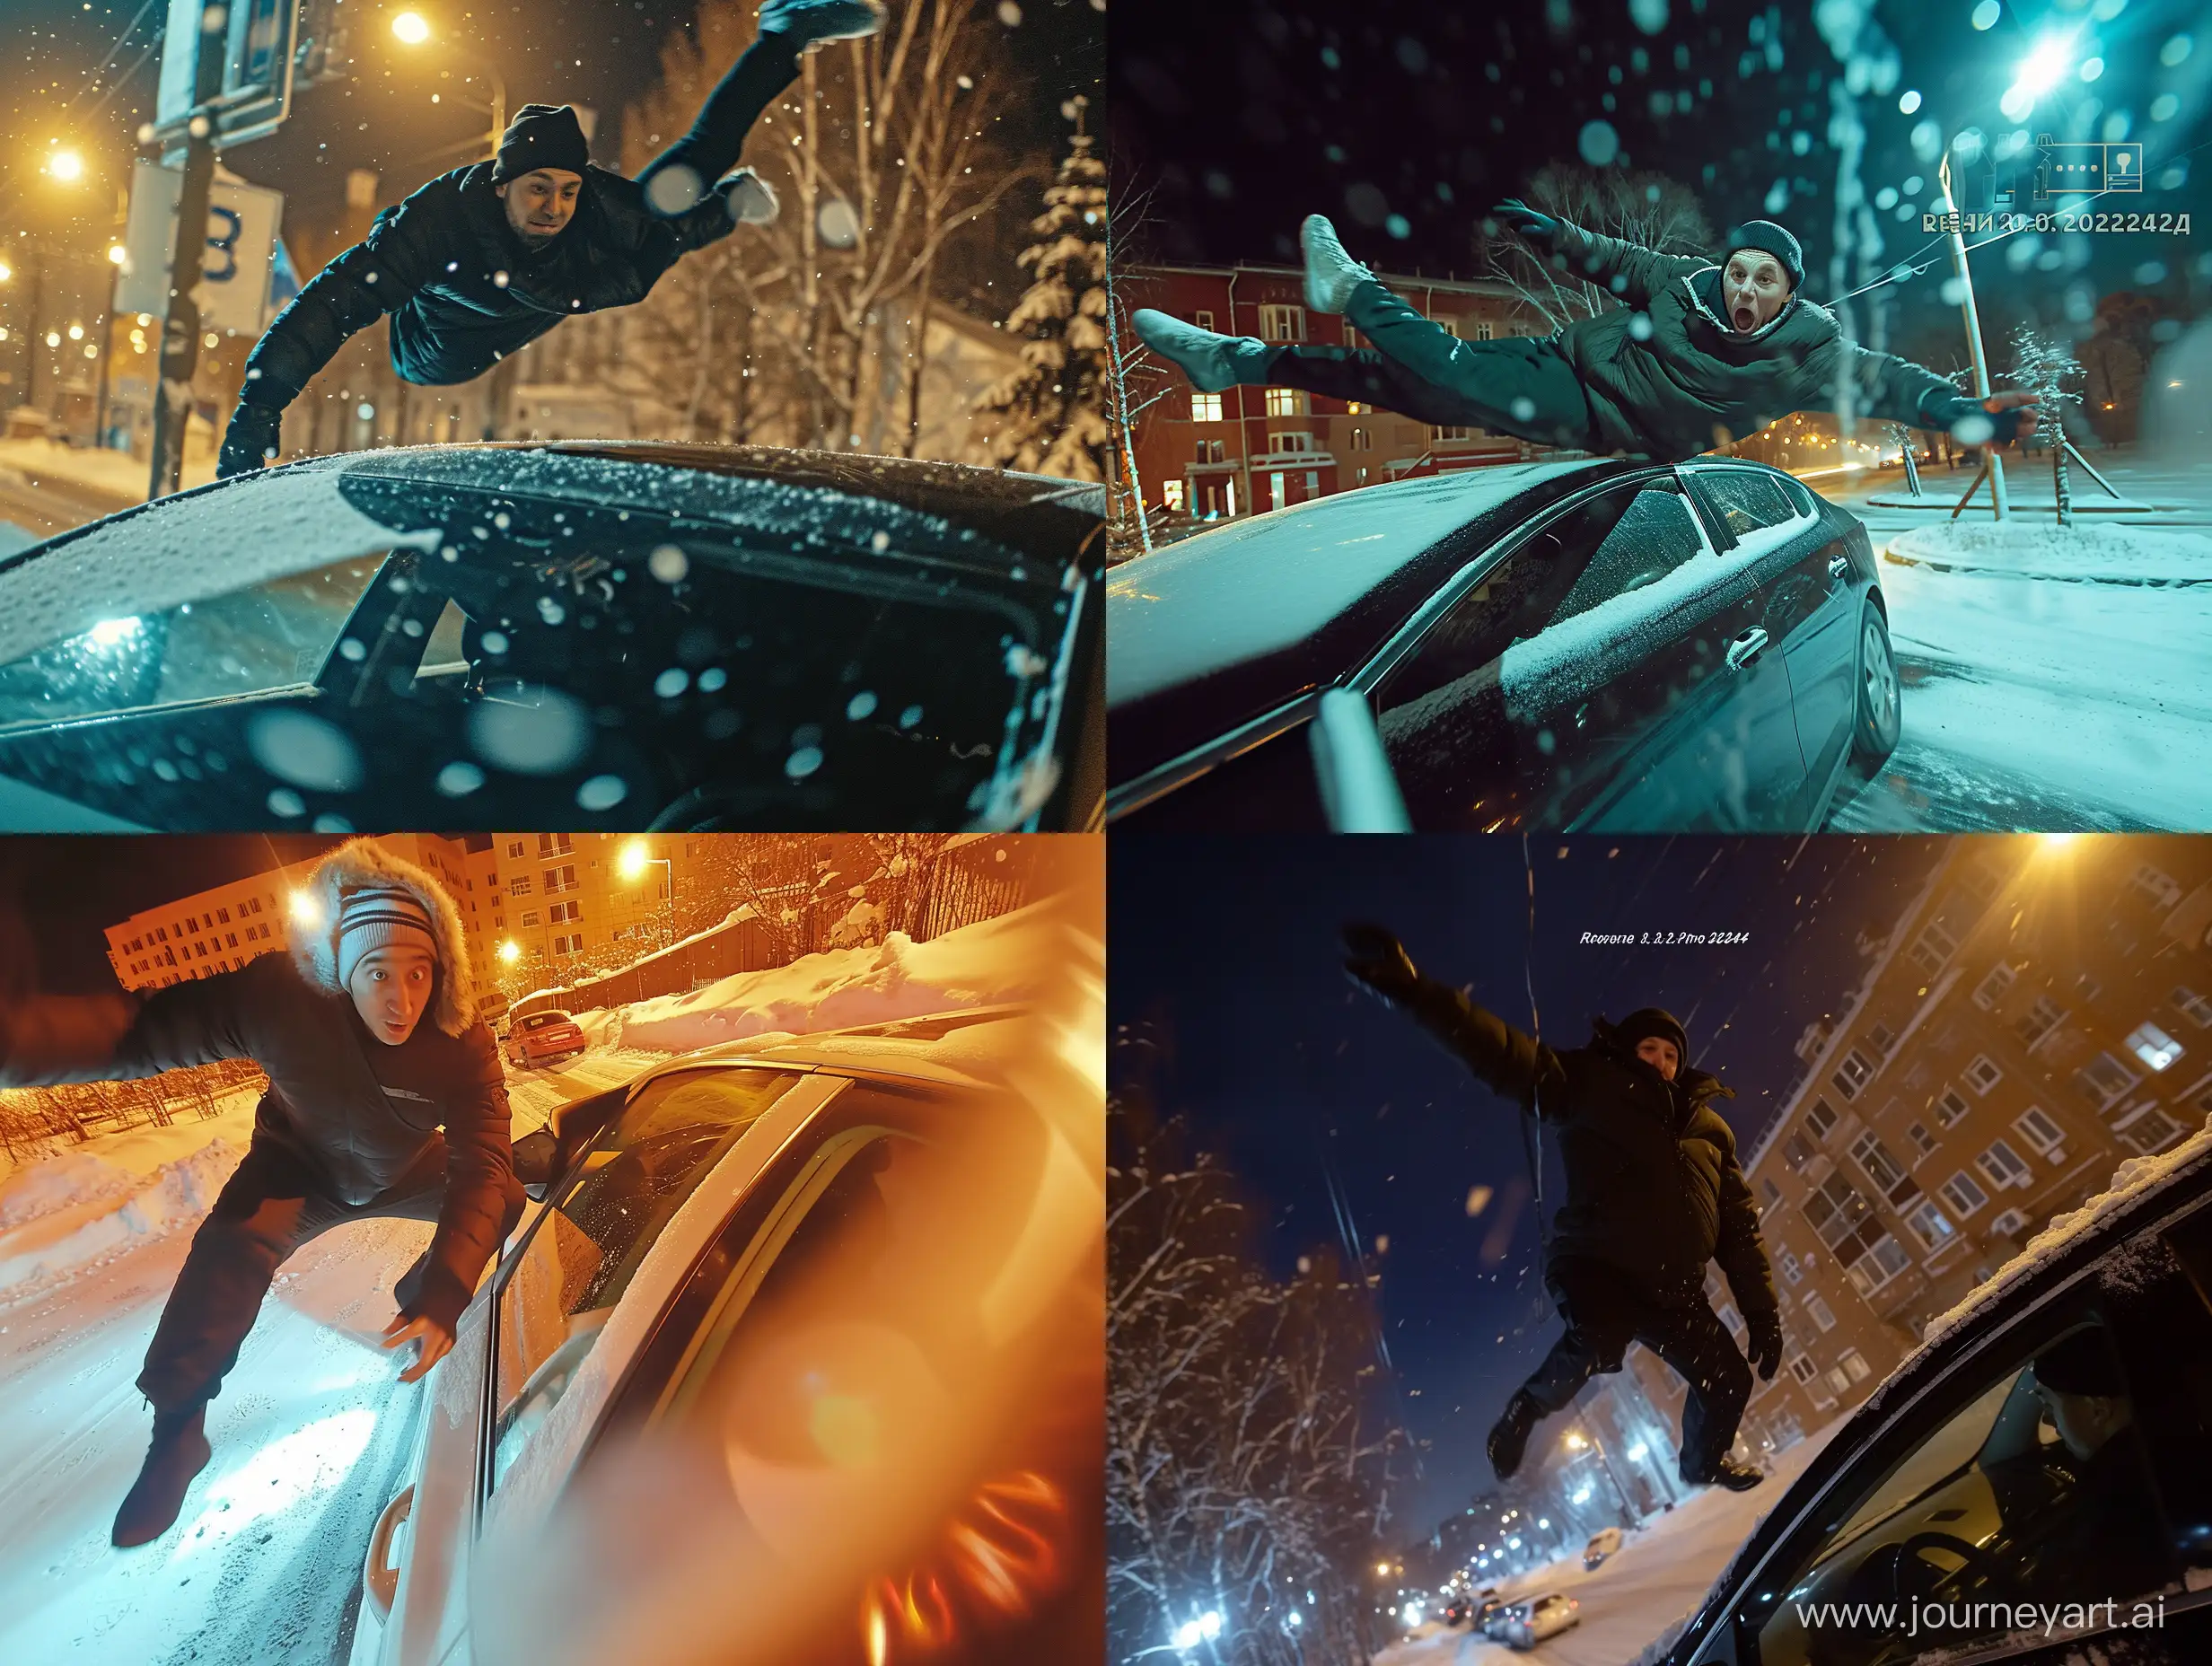 Dynamic-Nighttime-Somersault-in-Winter-Russia-Surveillance-Capture